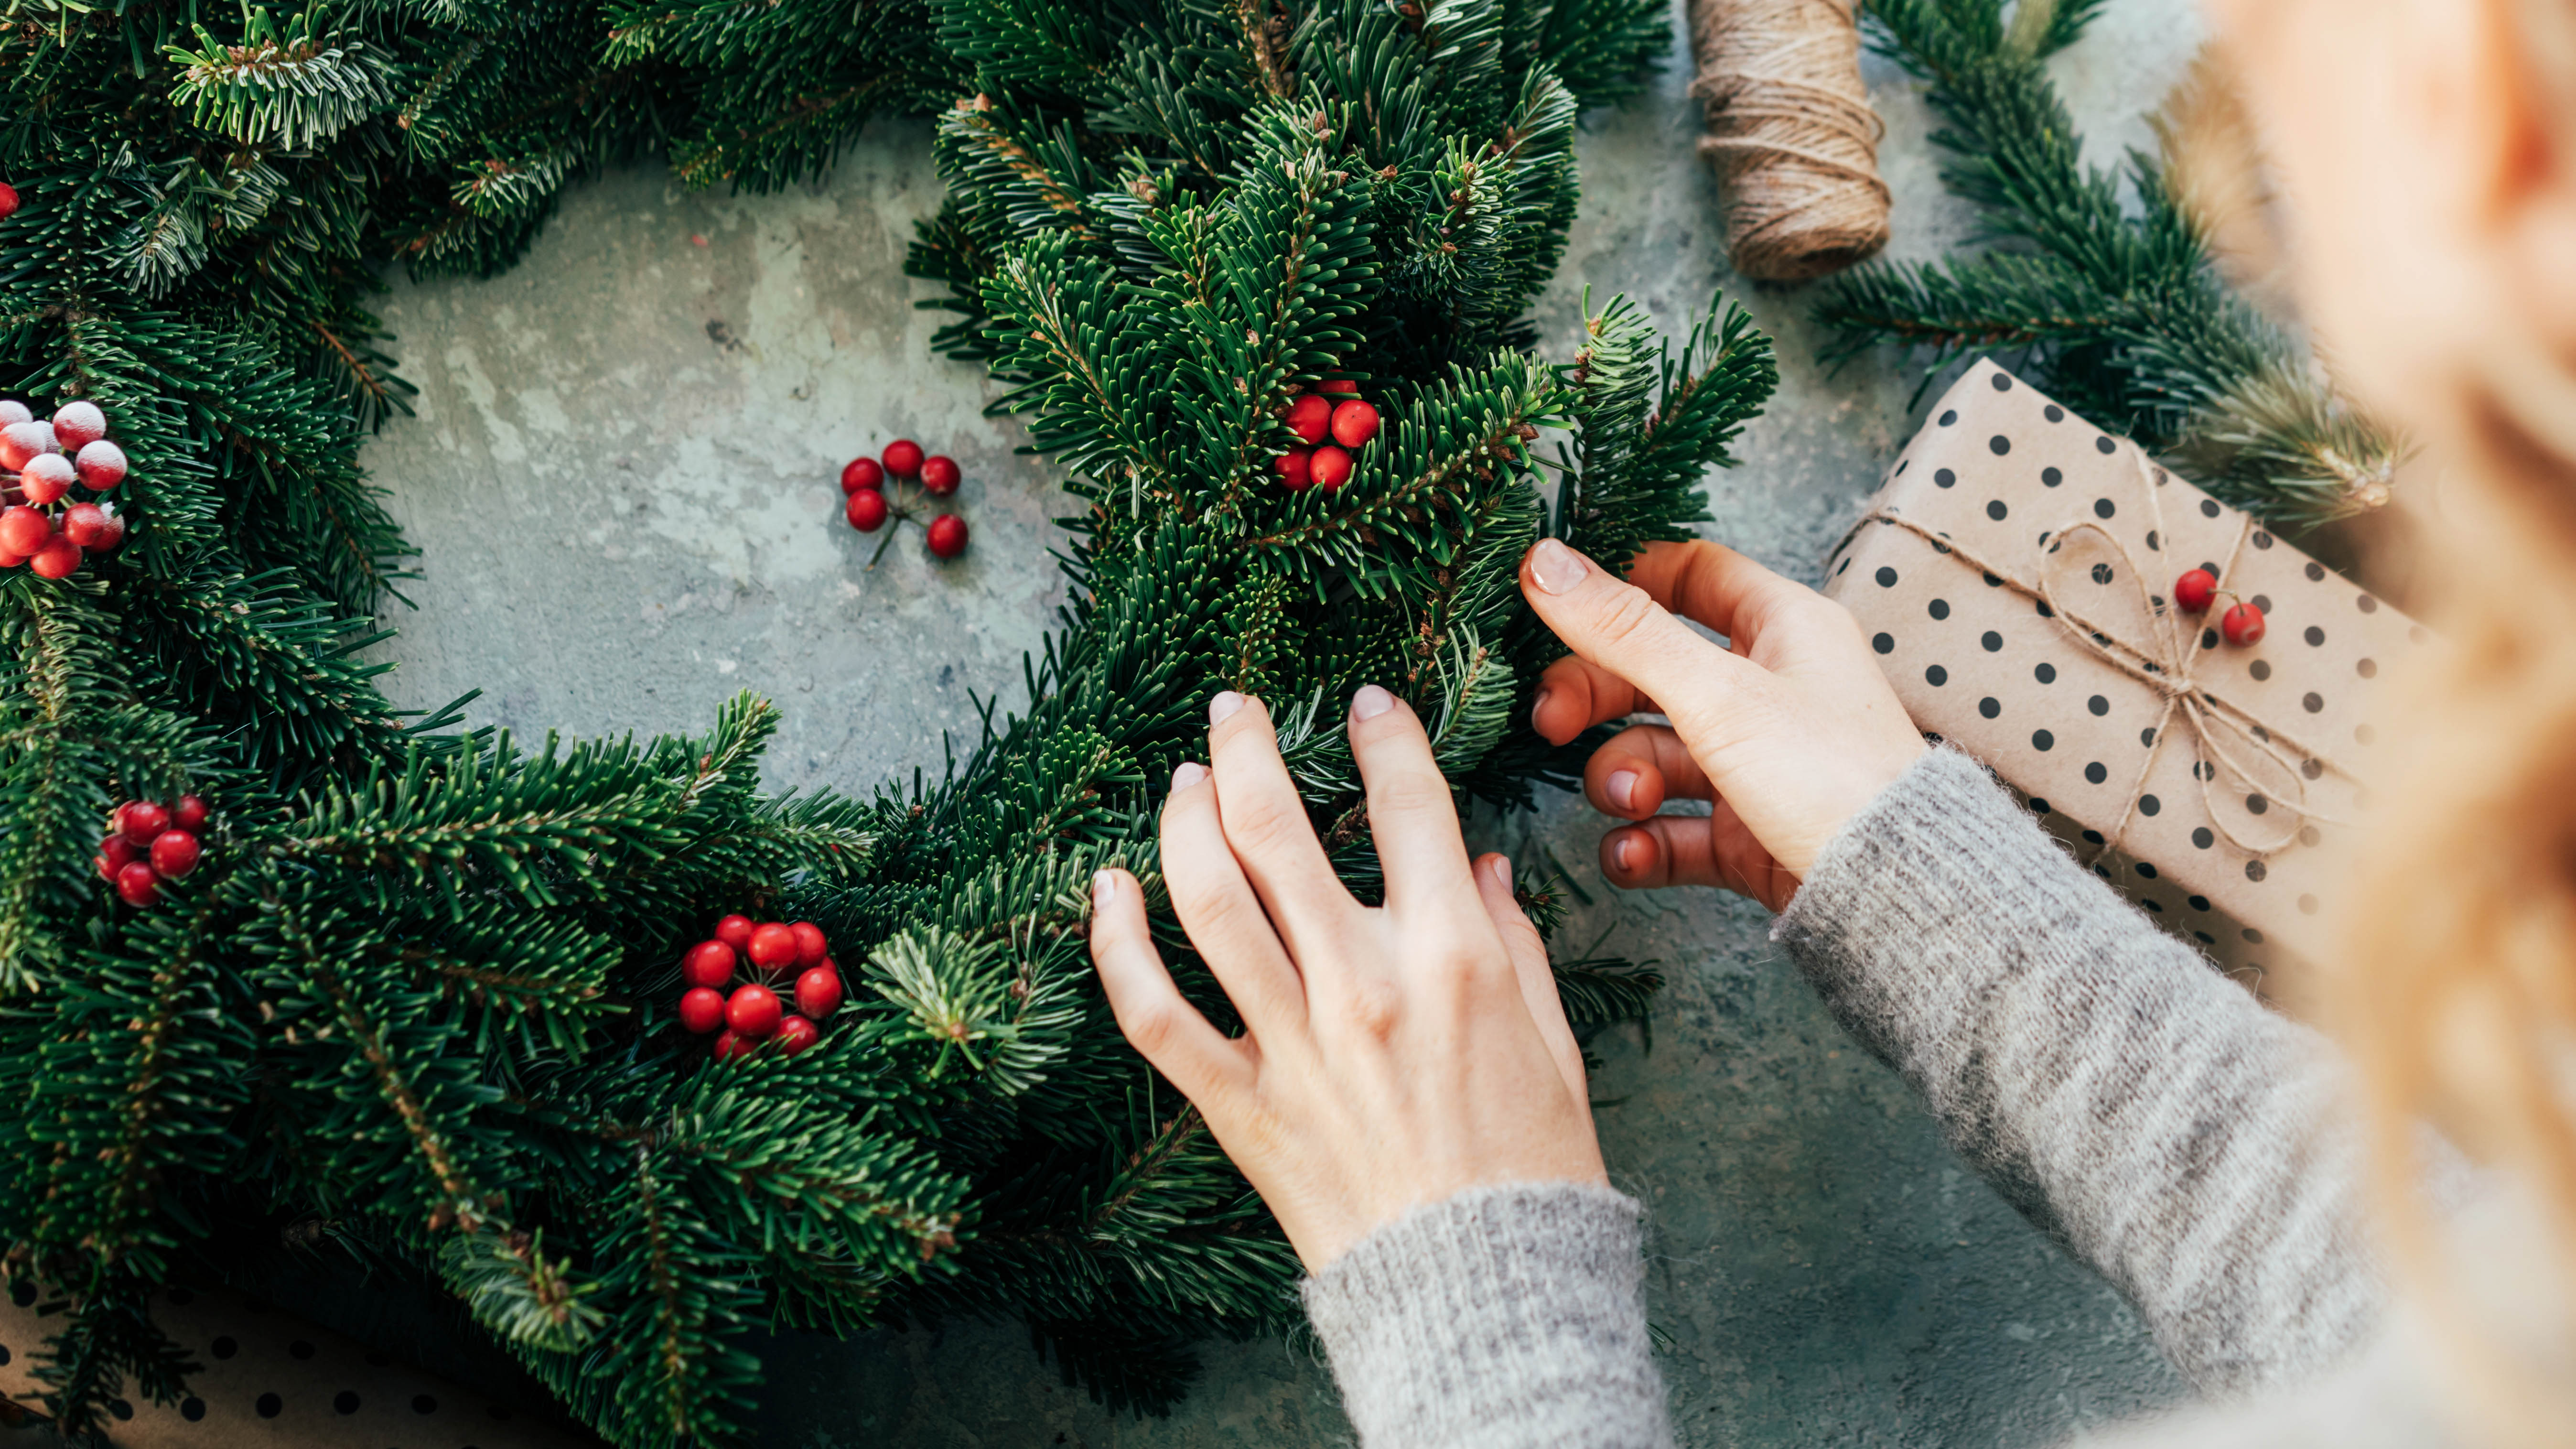 A woman makes a Christmas wreath